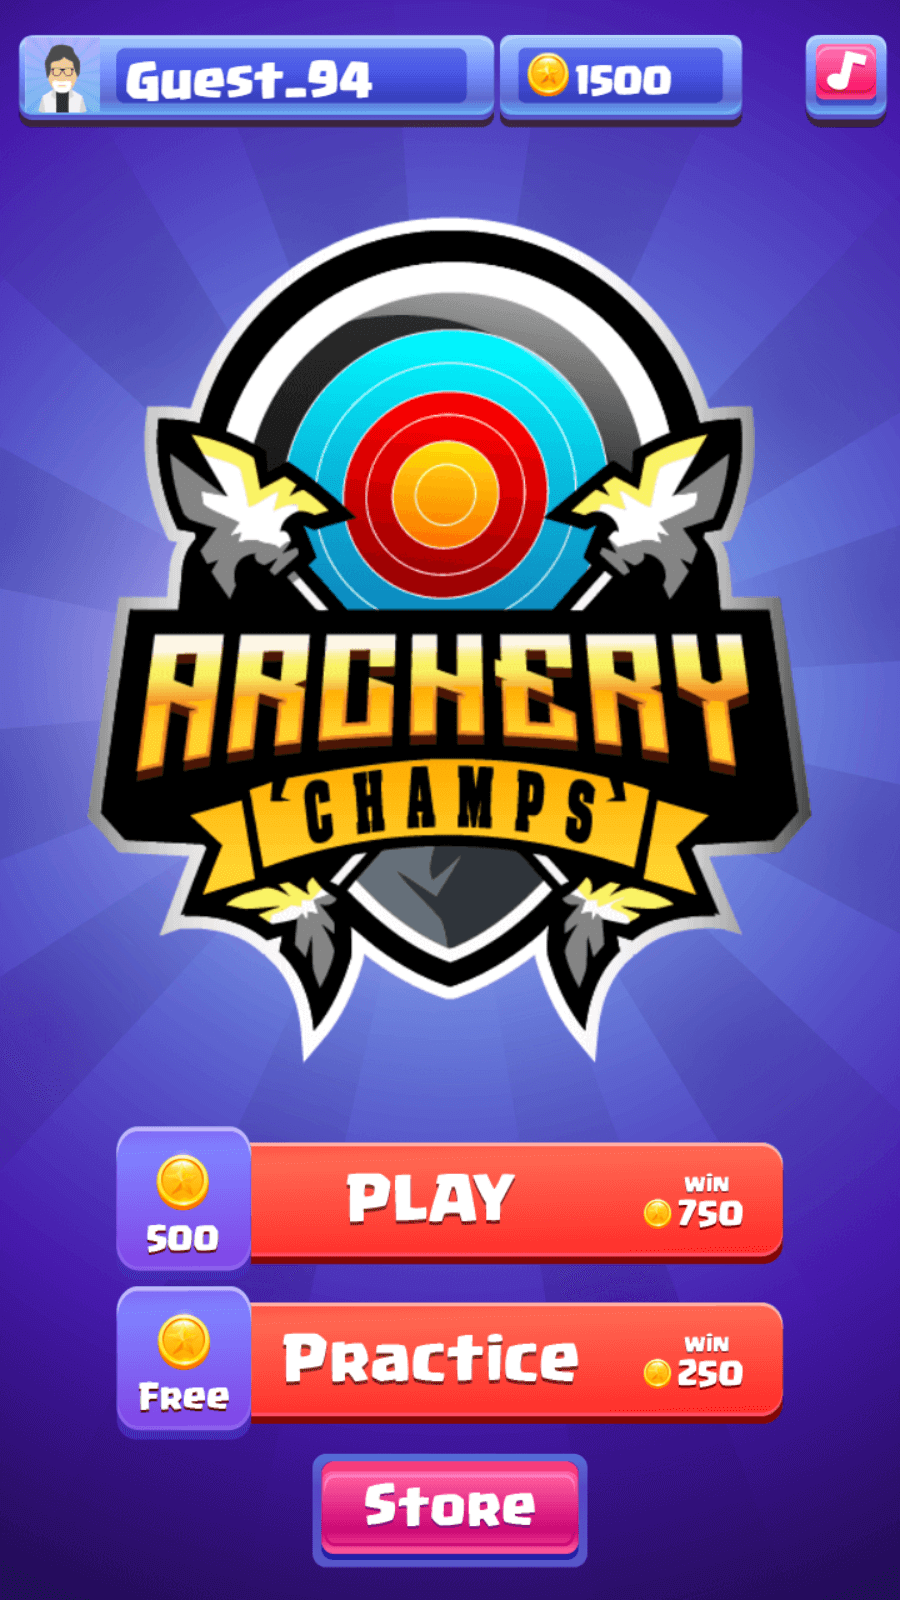 Archery Champs game screenshot